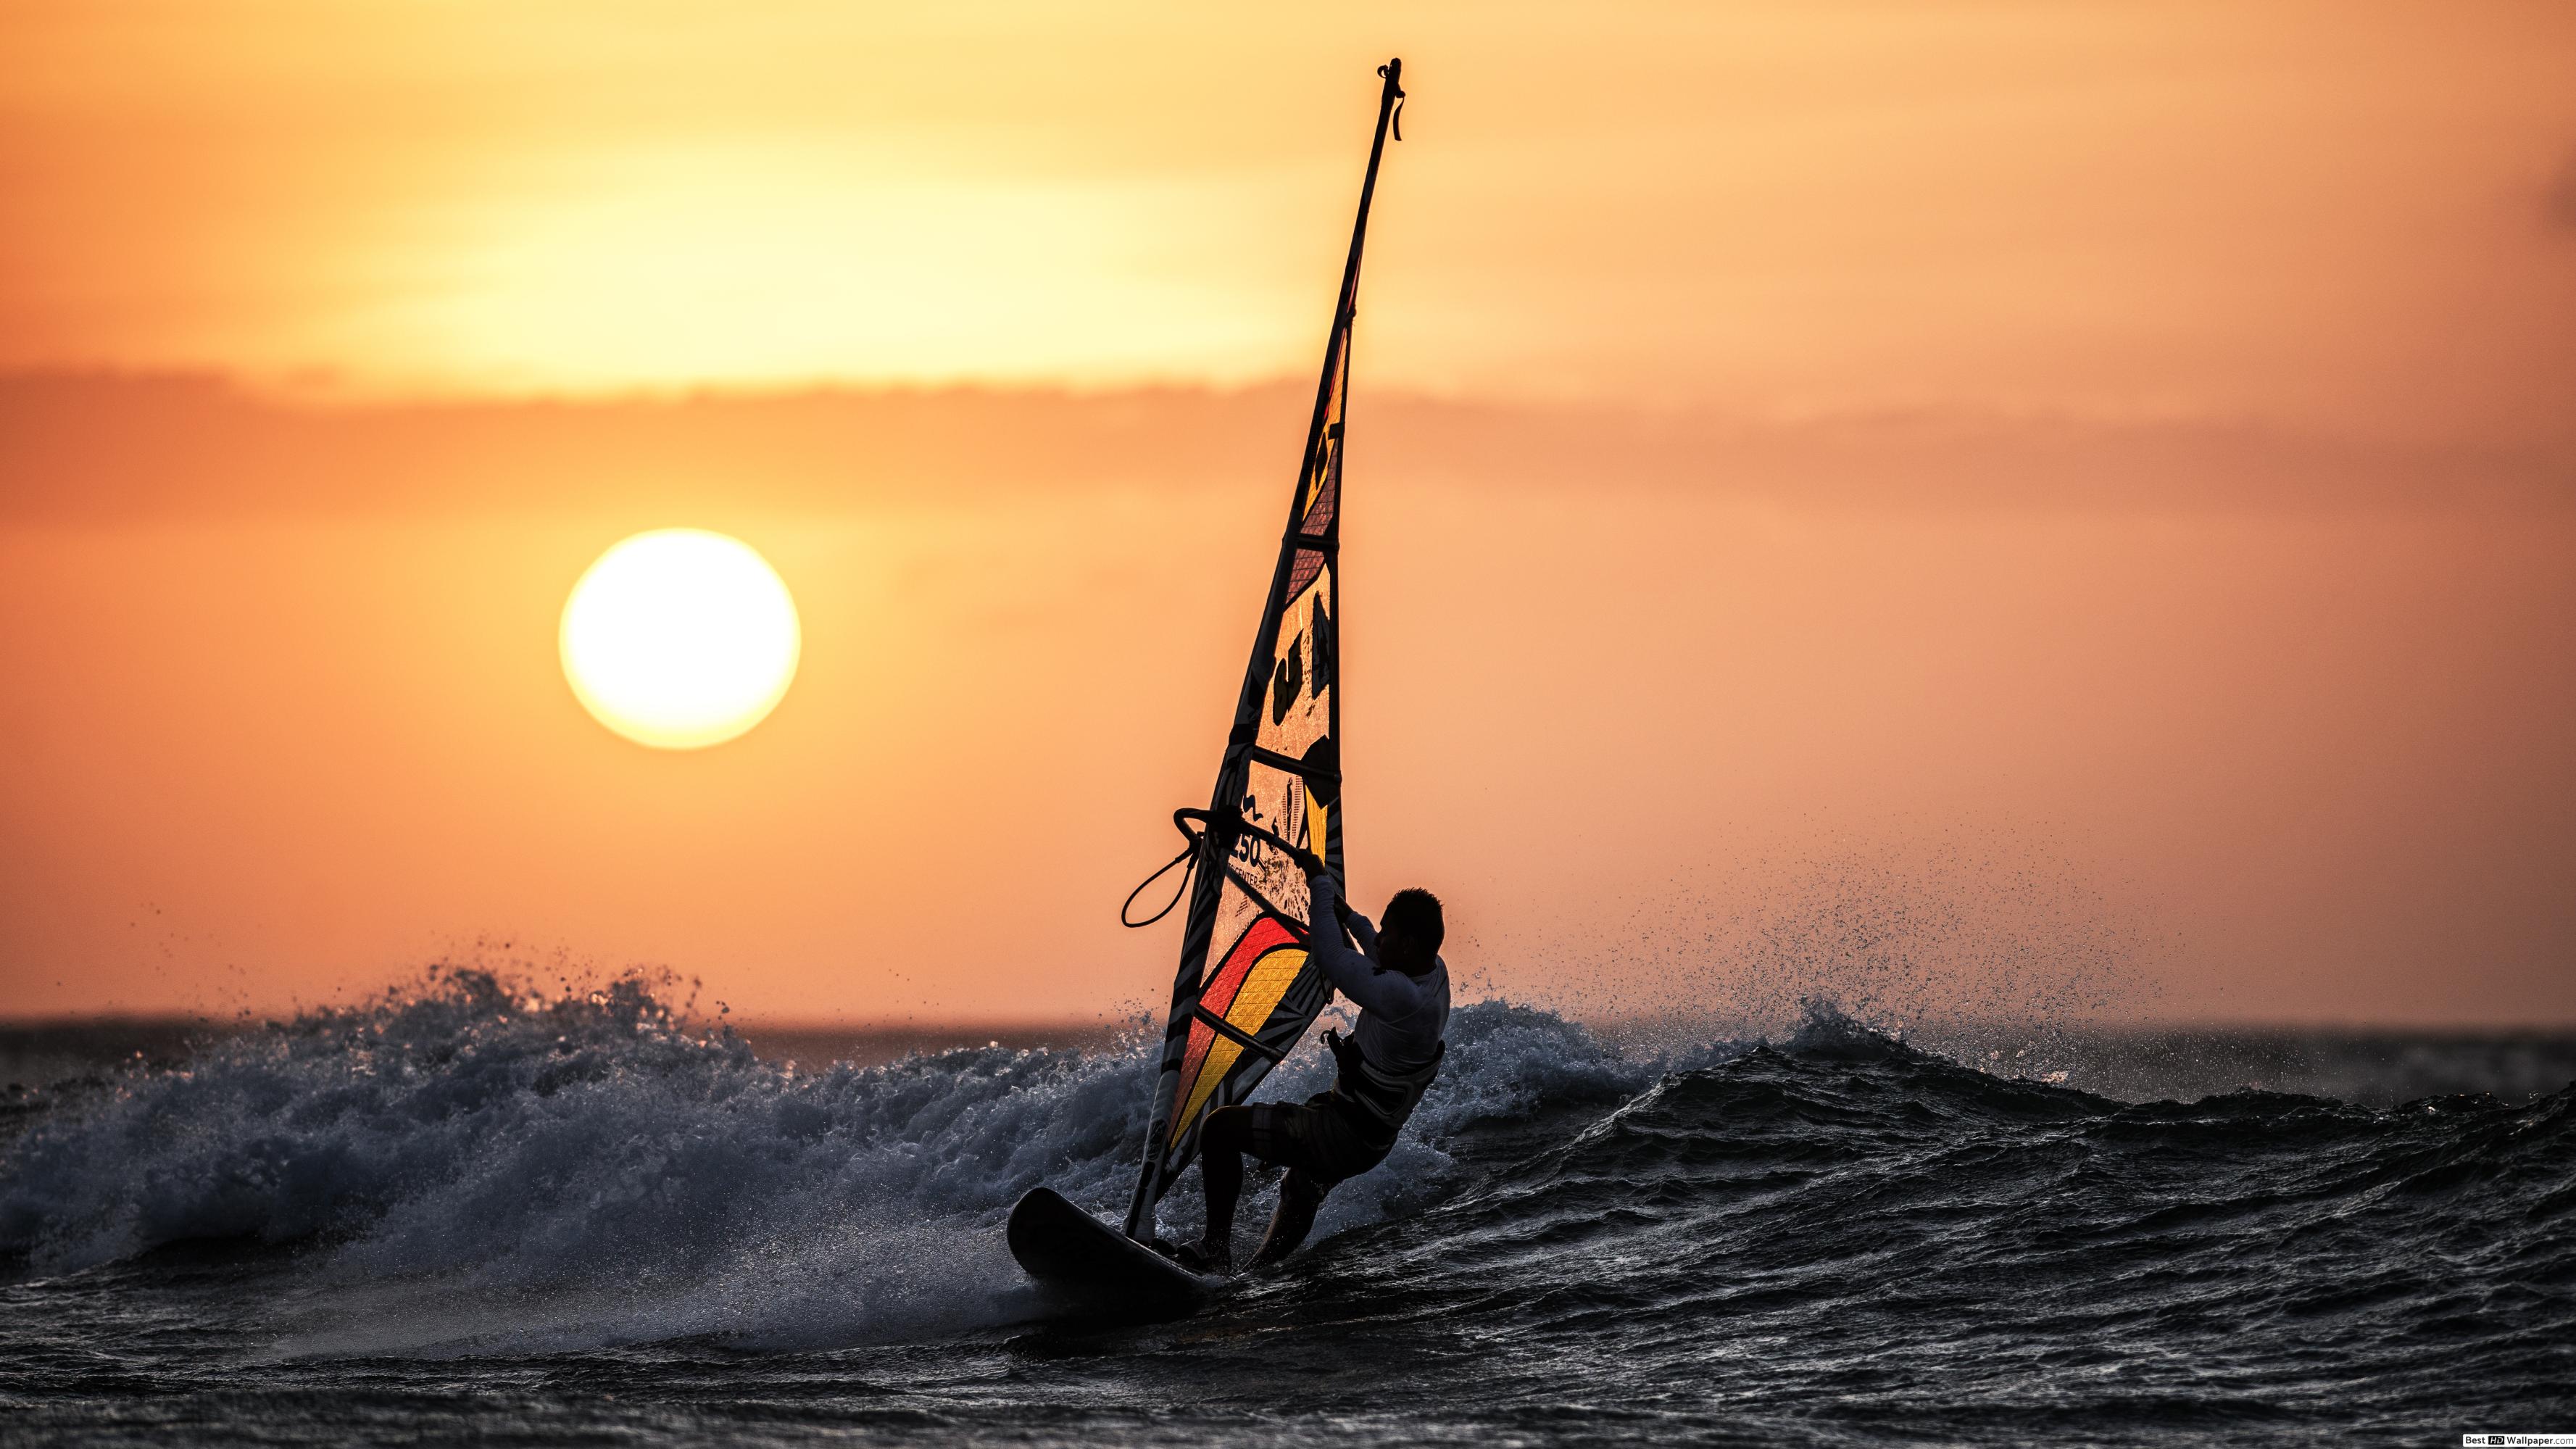 Windsurfing in sunset HD wallpaper download